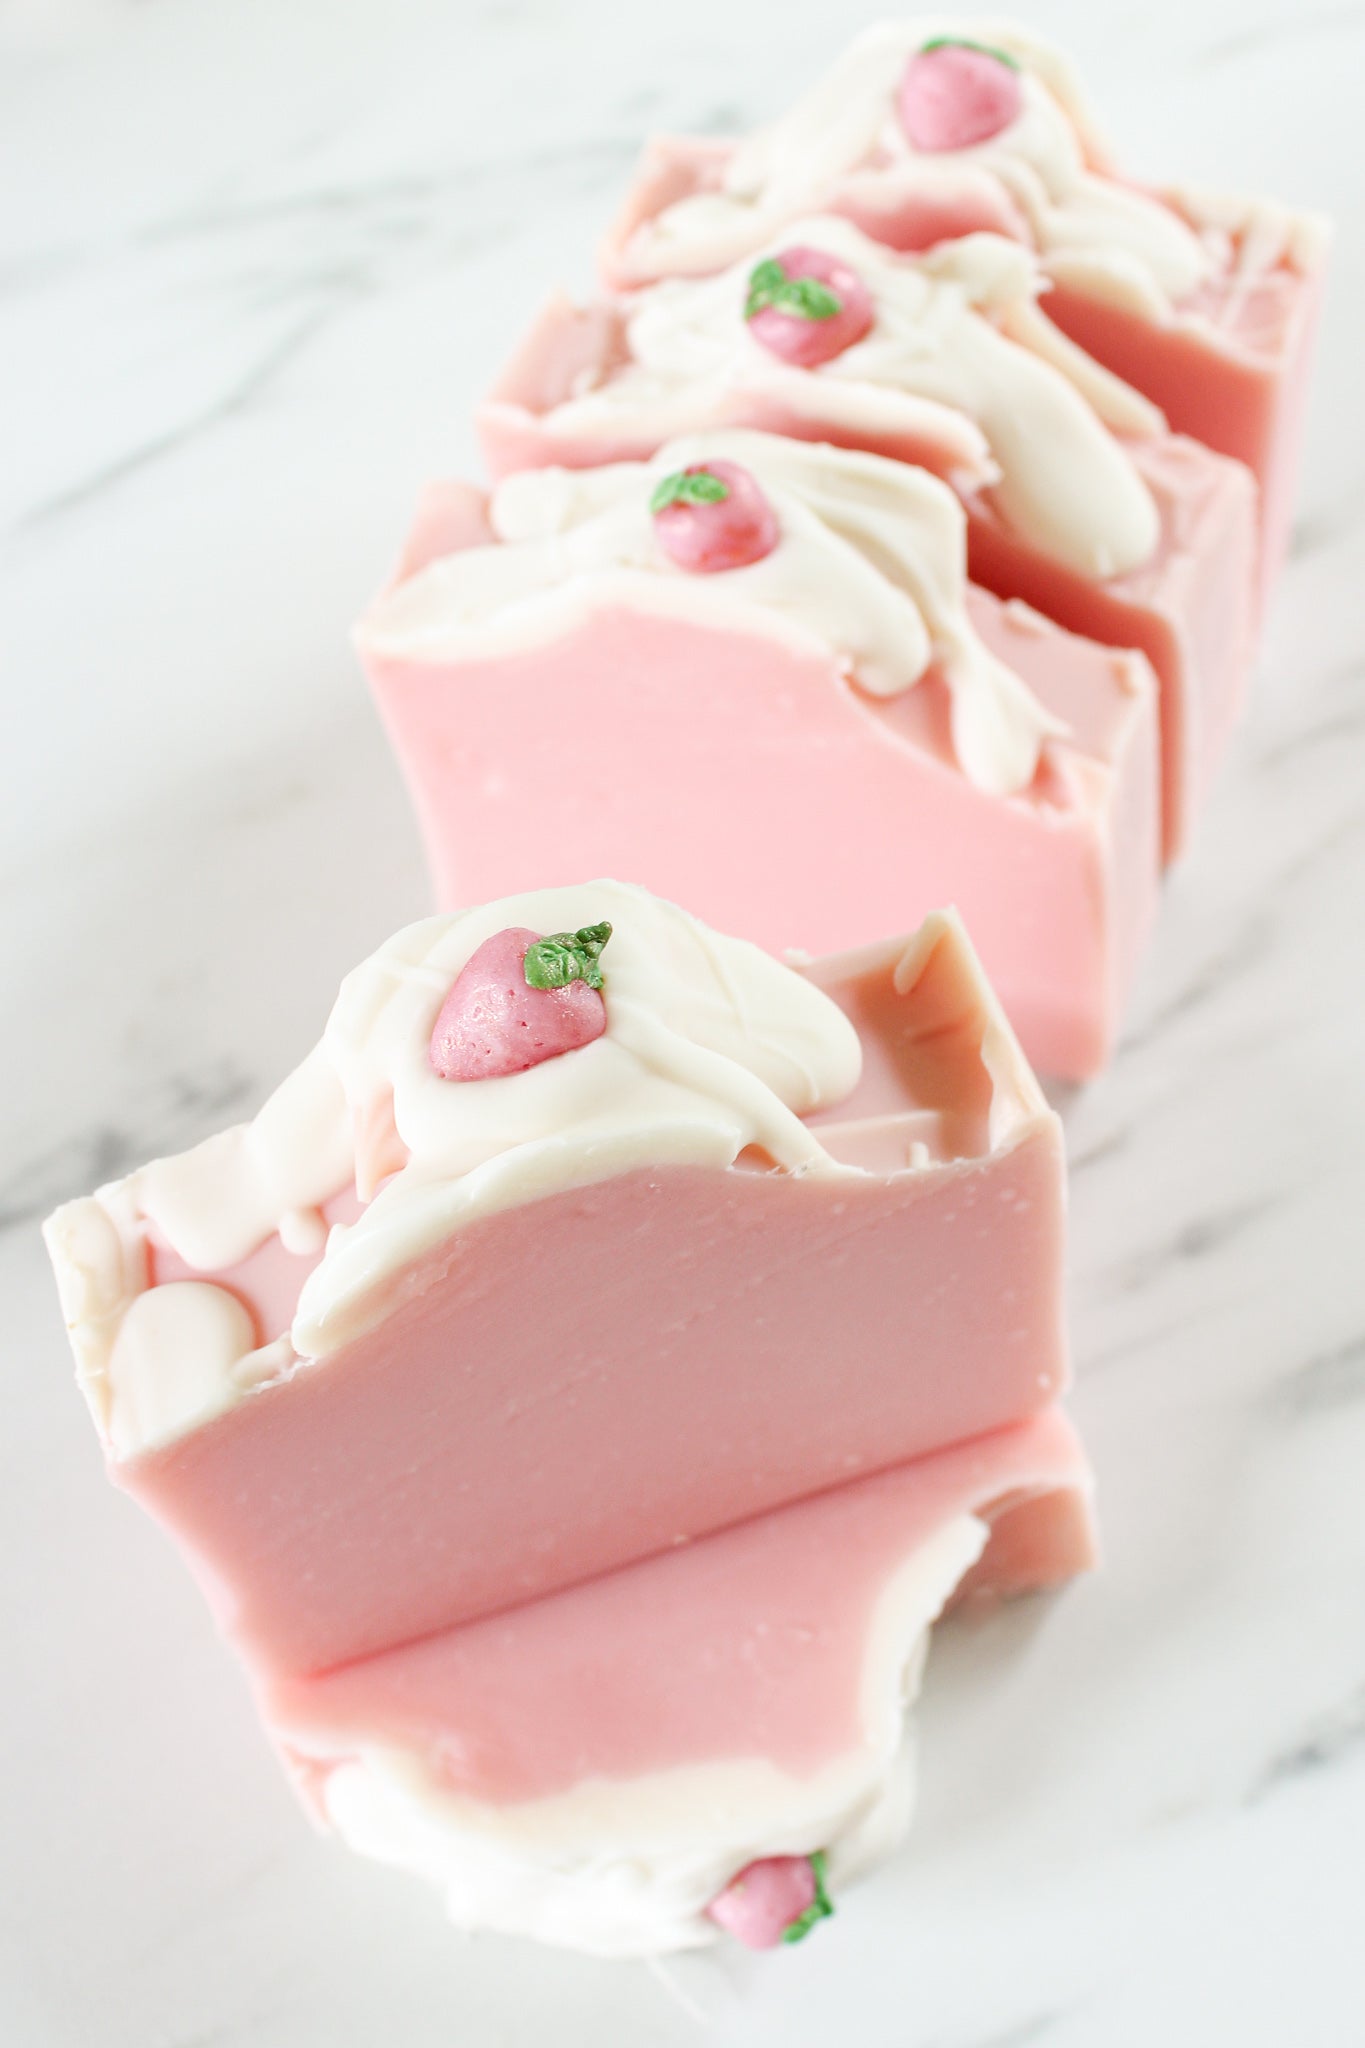 Strawberry Sunshine - Handcrafted Soap Bar